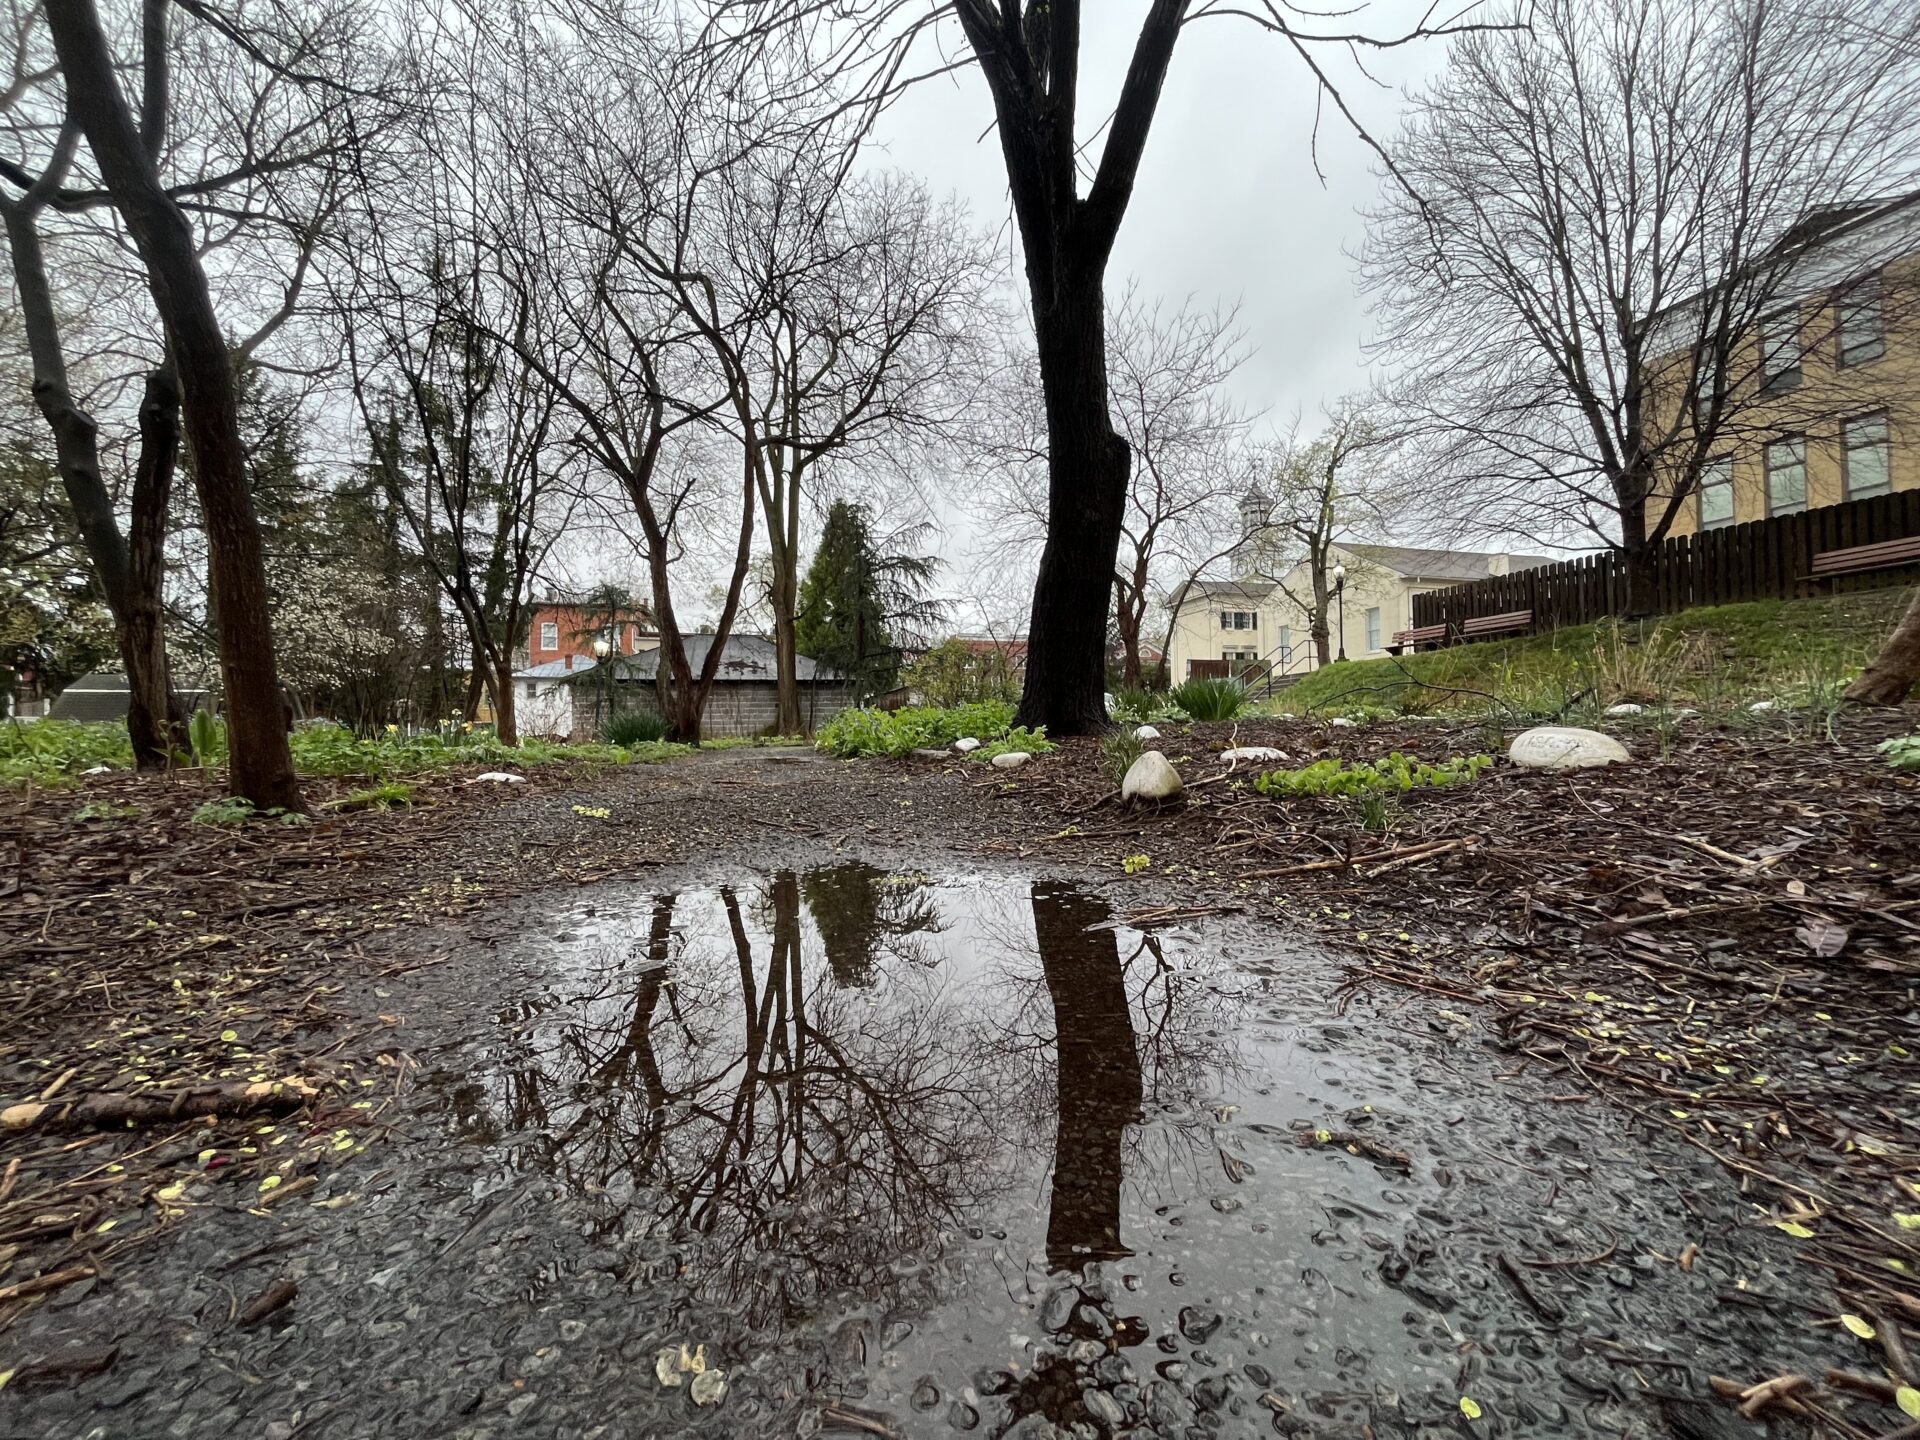 A puddle reflects trees along a path at Shepherd University.